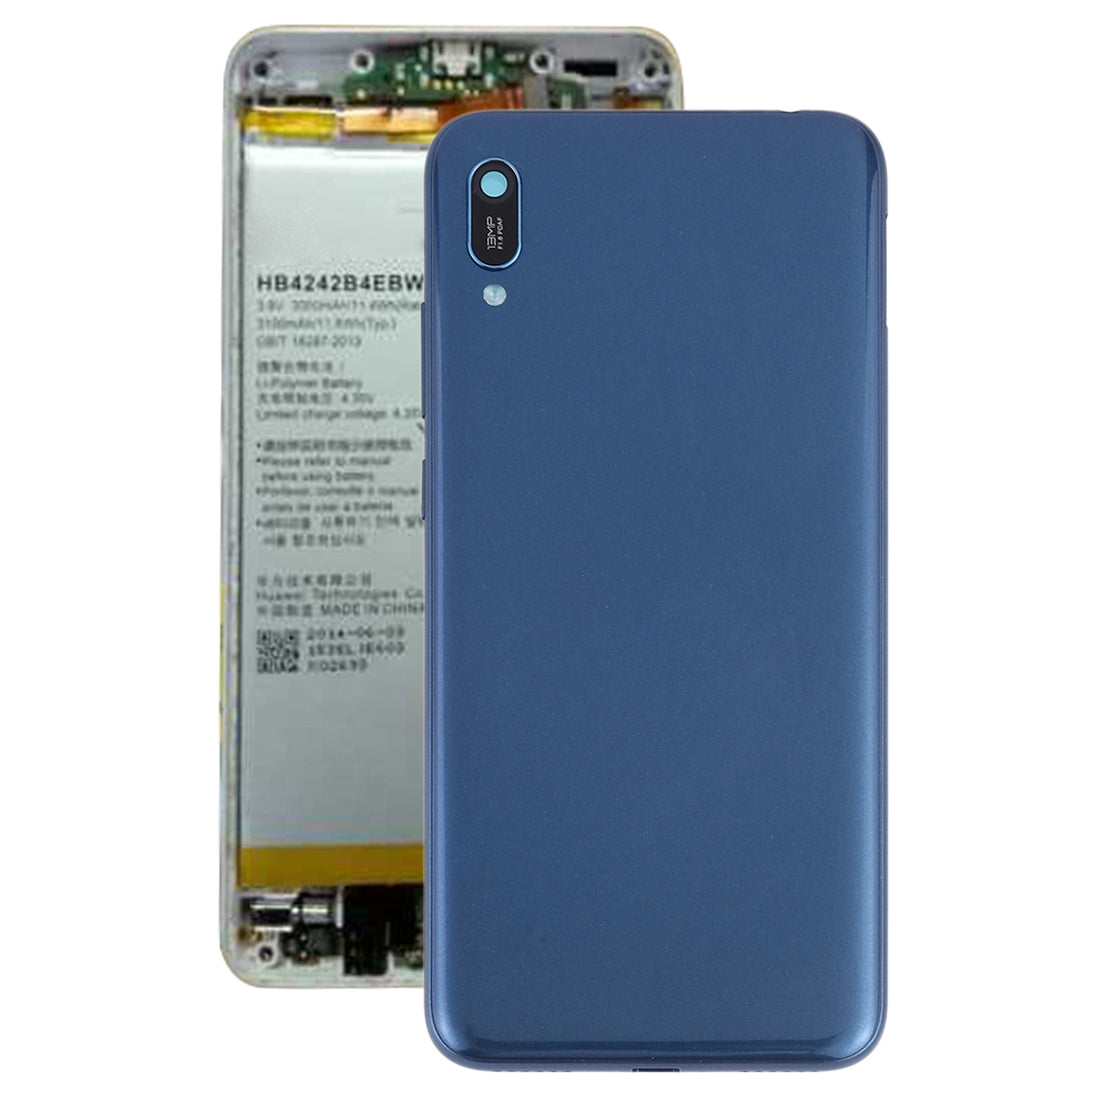 Tapa Bateria Back Cover + Lente Camara Trasera Huawei Y6 2019 Azul